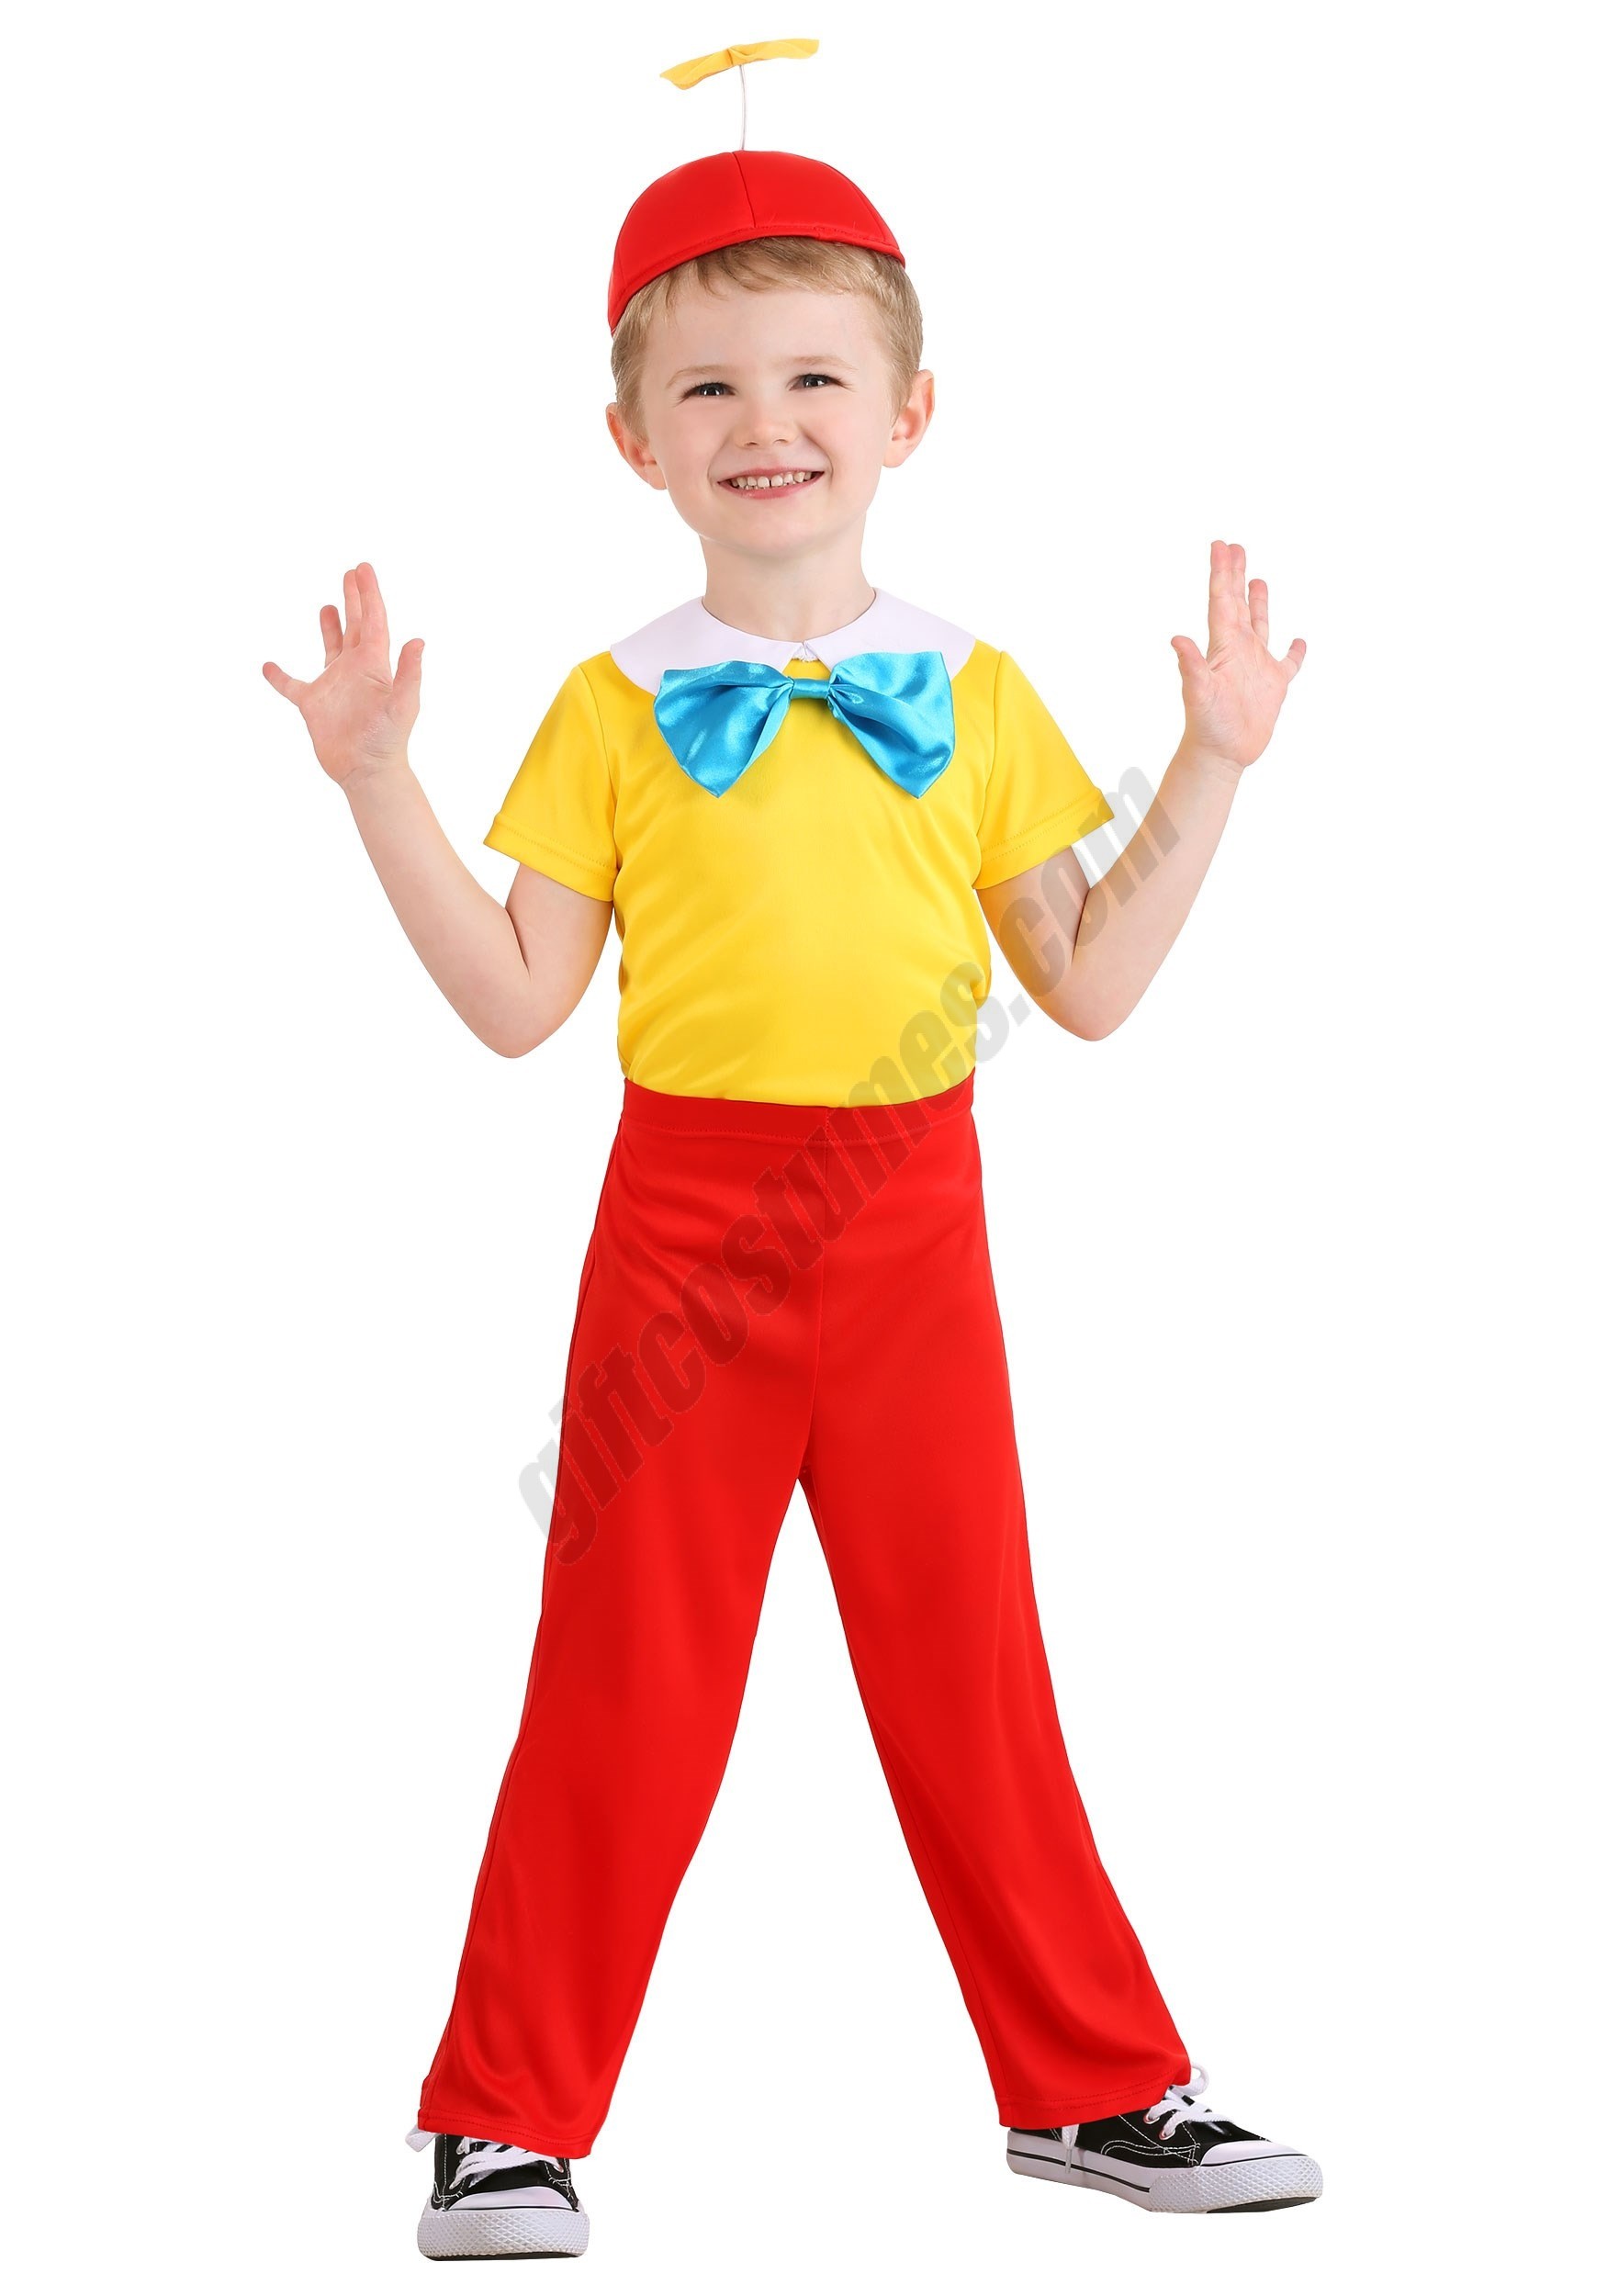 Toddler's Zany Tweedle Dee/Dum Costume Promotions - Toddler's Zany Tweedle Dee/Dum Costume Promotions